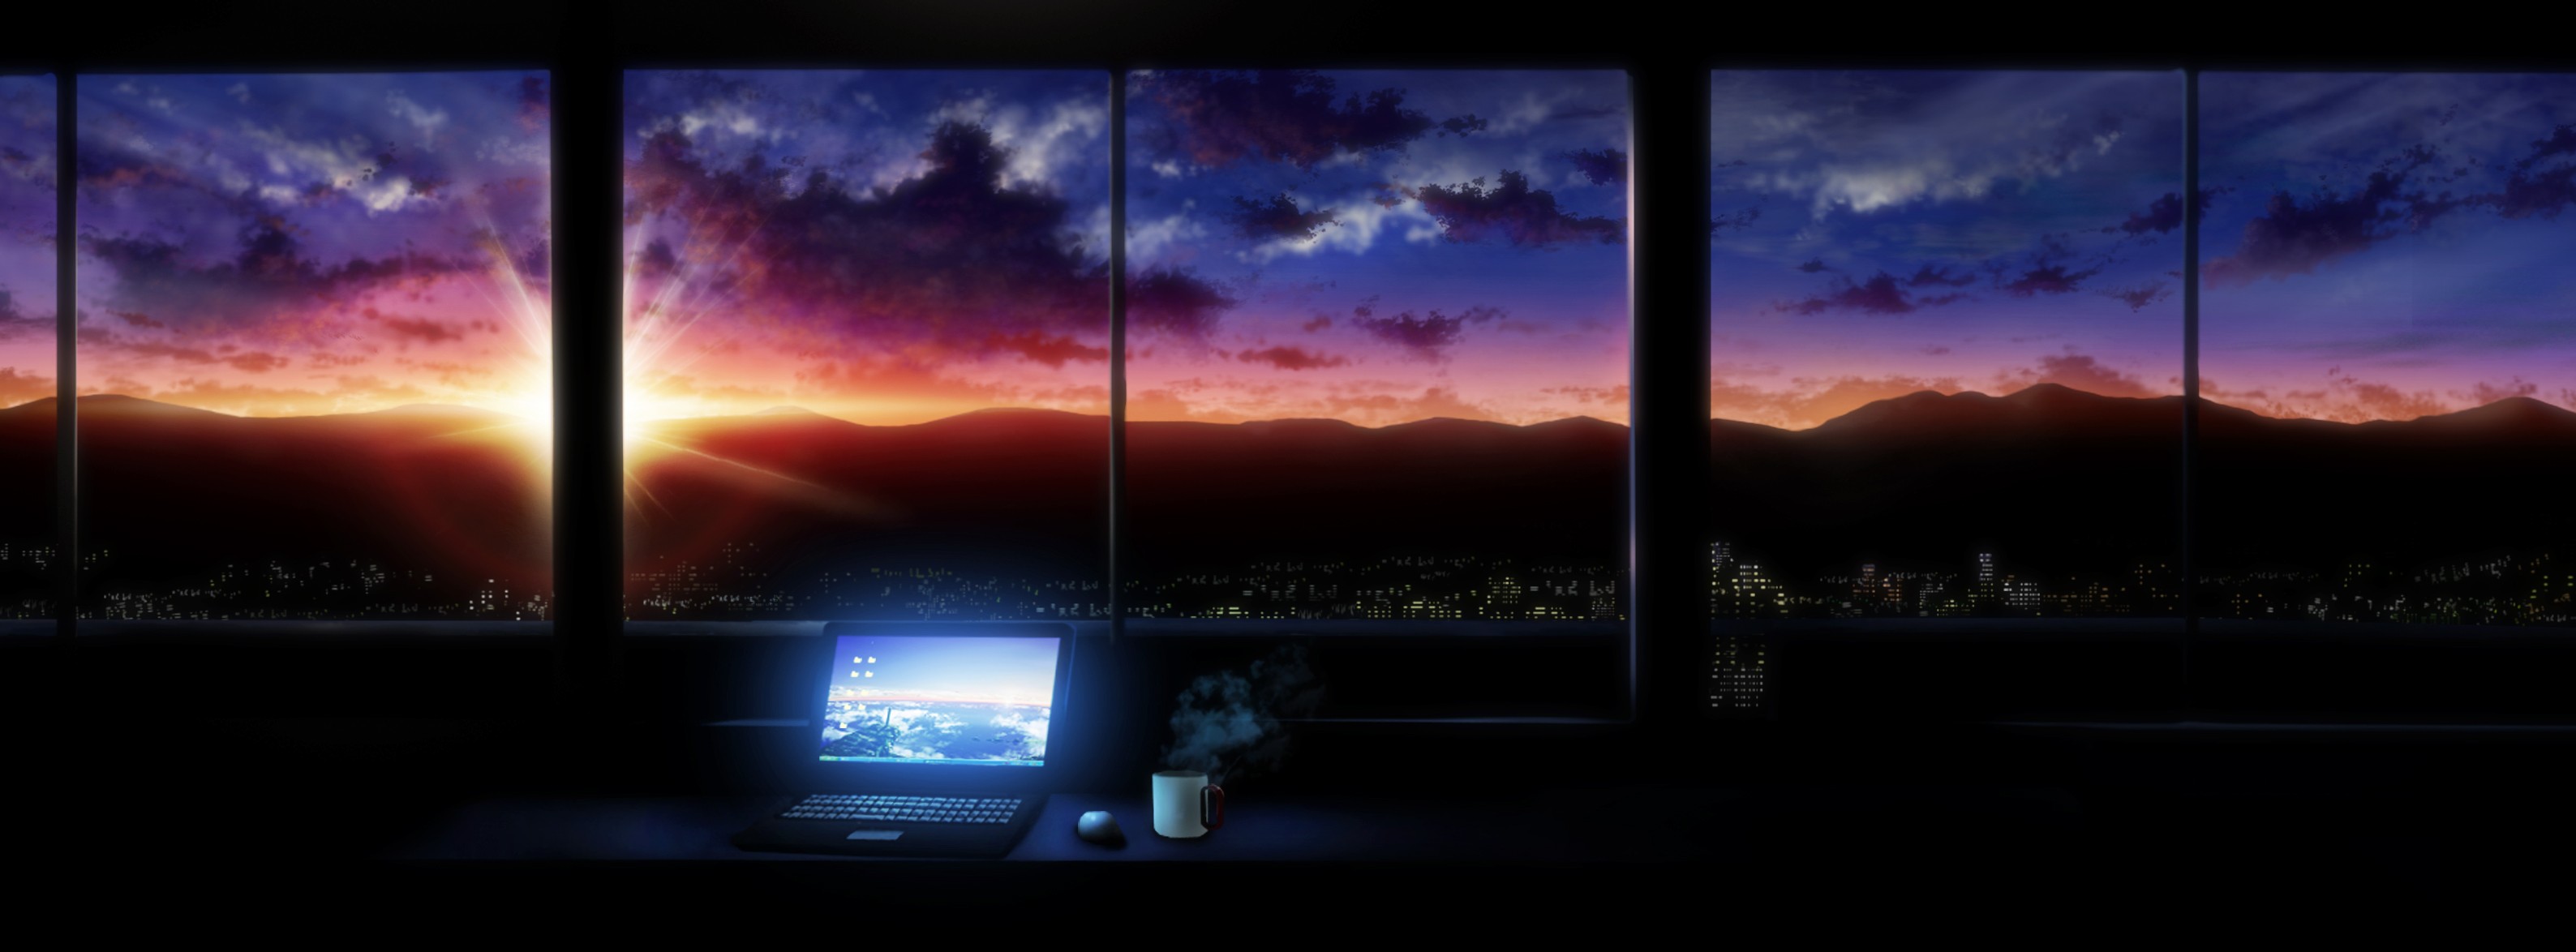 General 3176x1174 multiple display Sun anime laptop cup sunlight sky